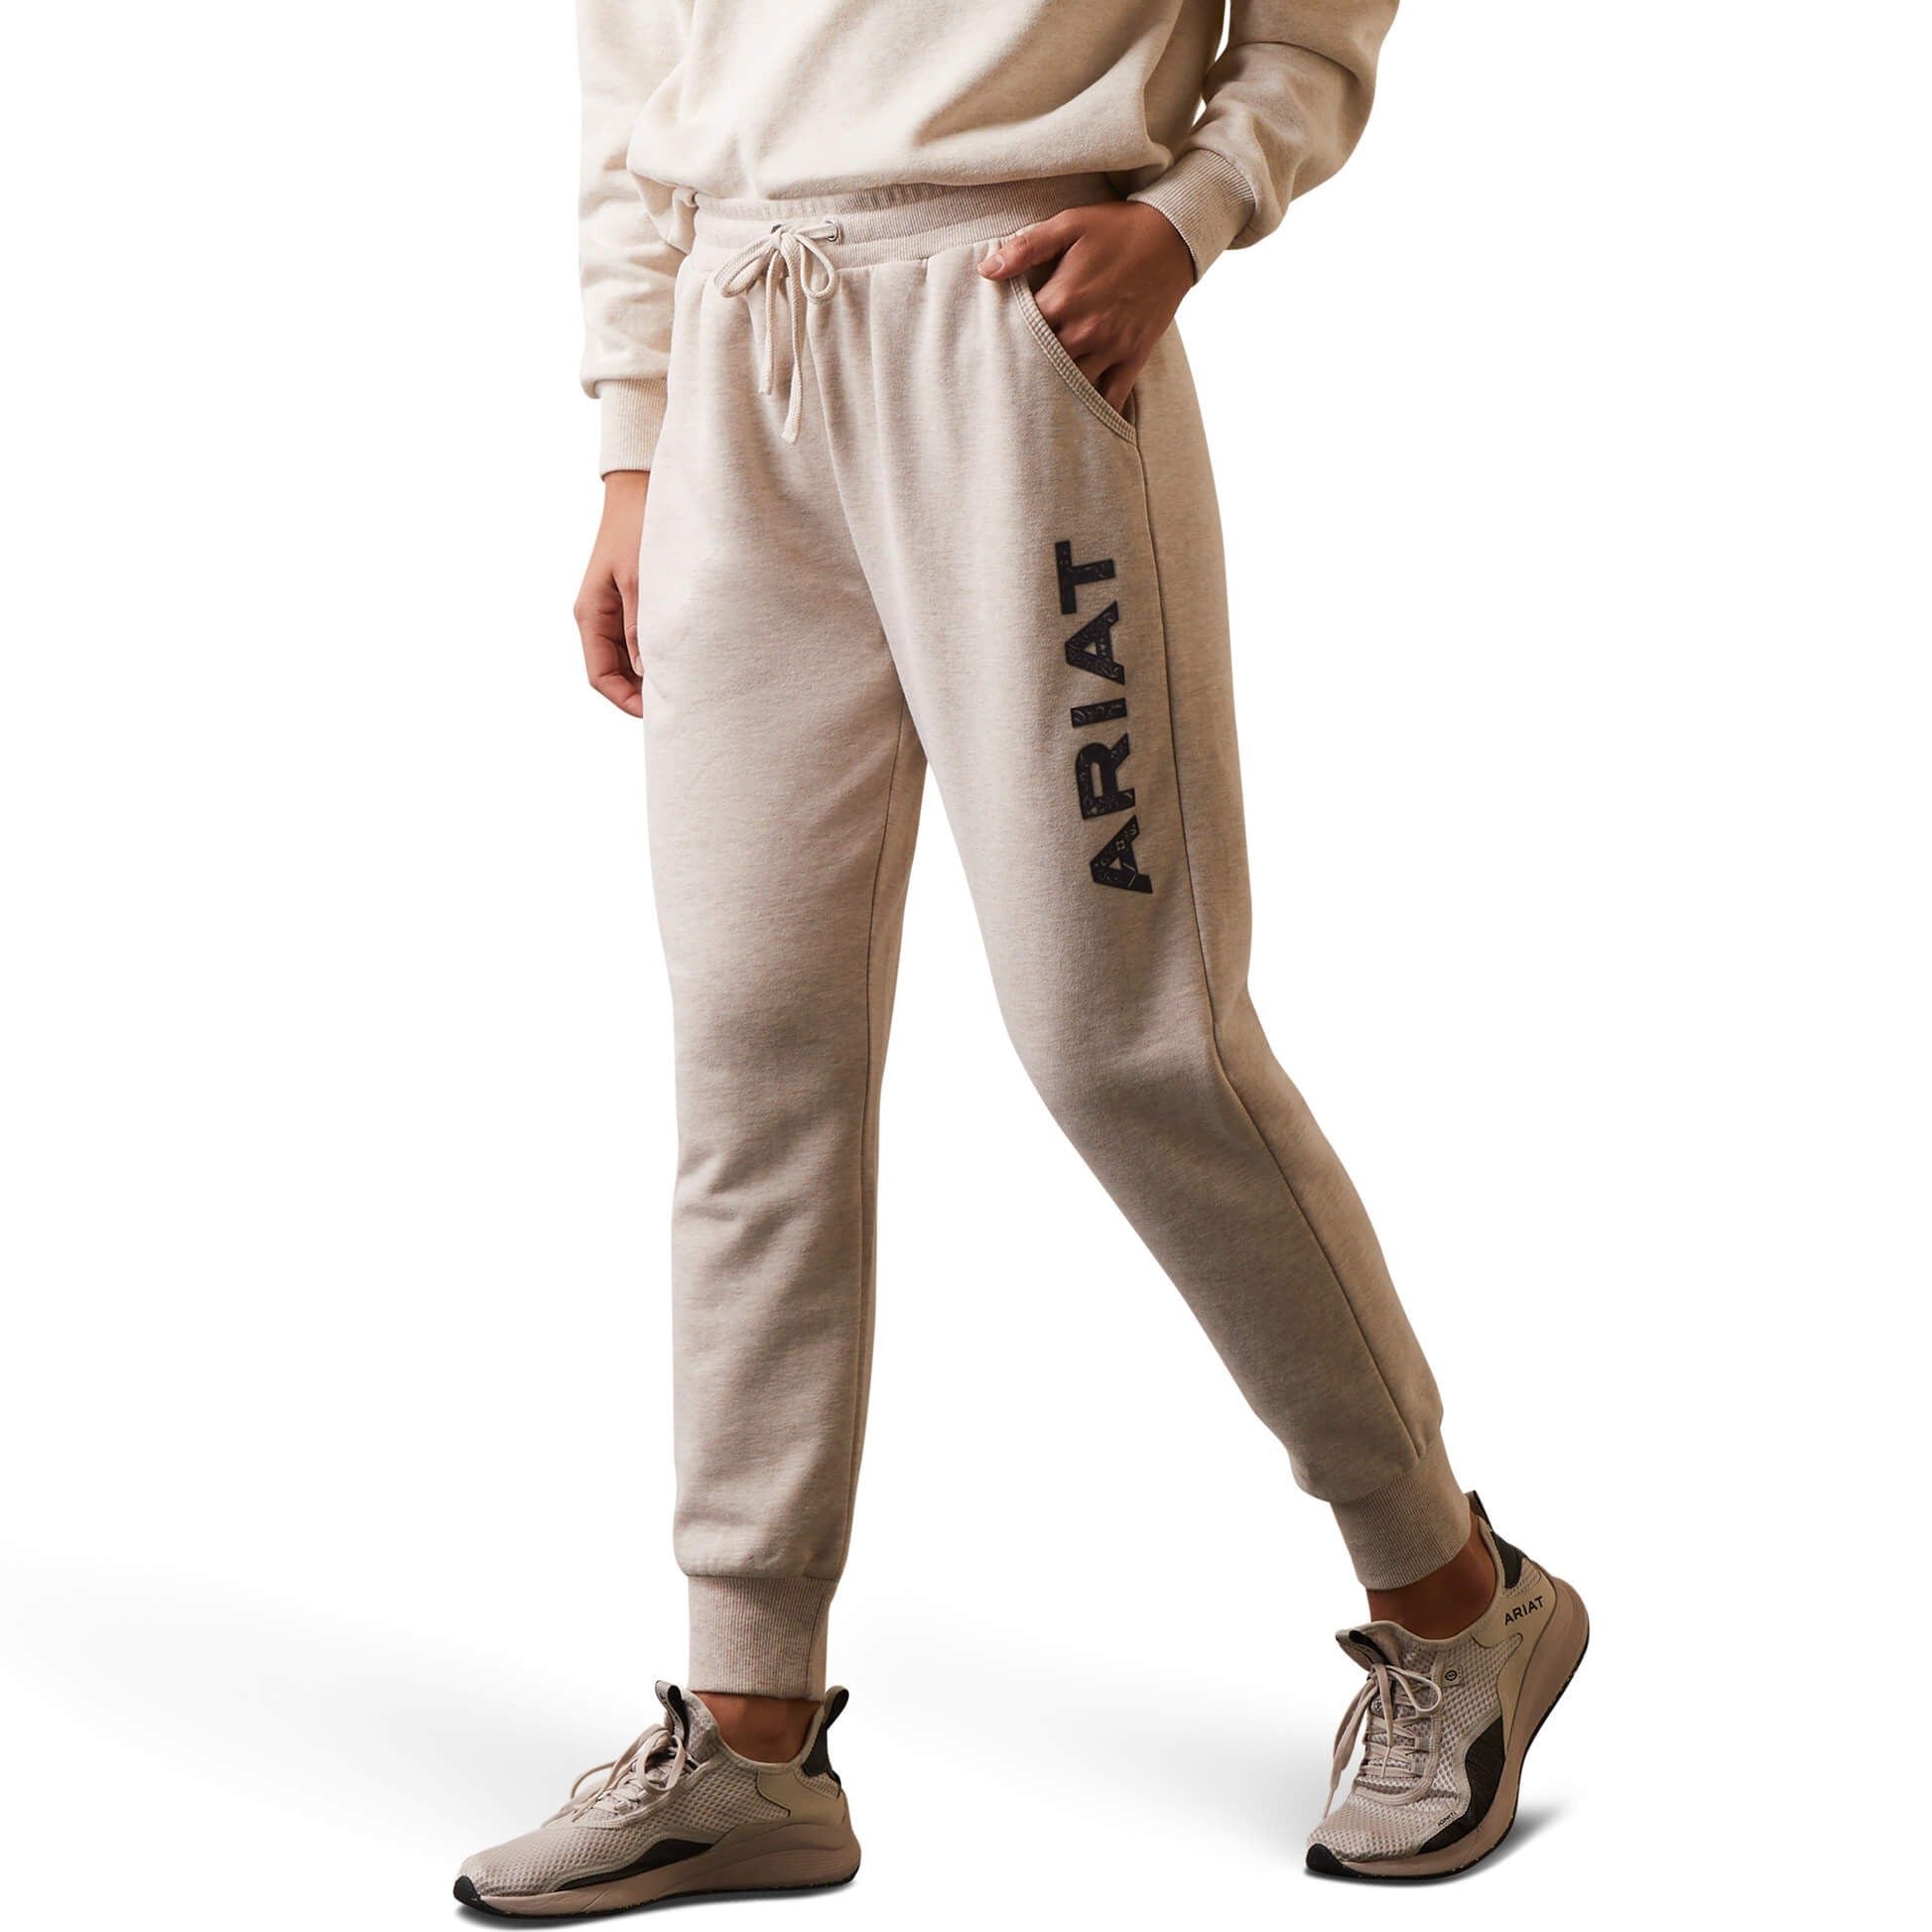 Ariat FR Grey Sweatpants Joggers Medium - Sweats & hoodies